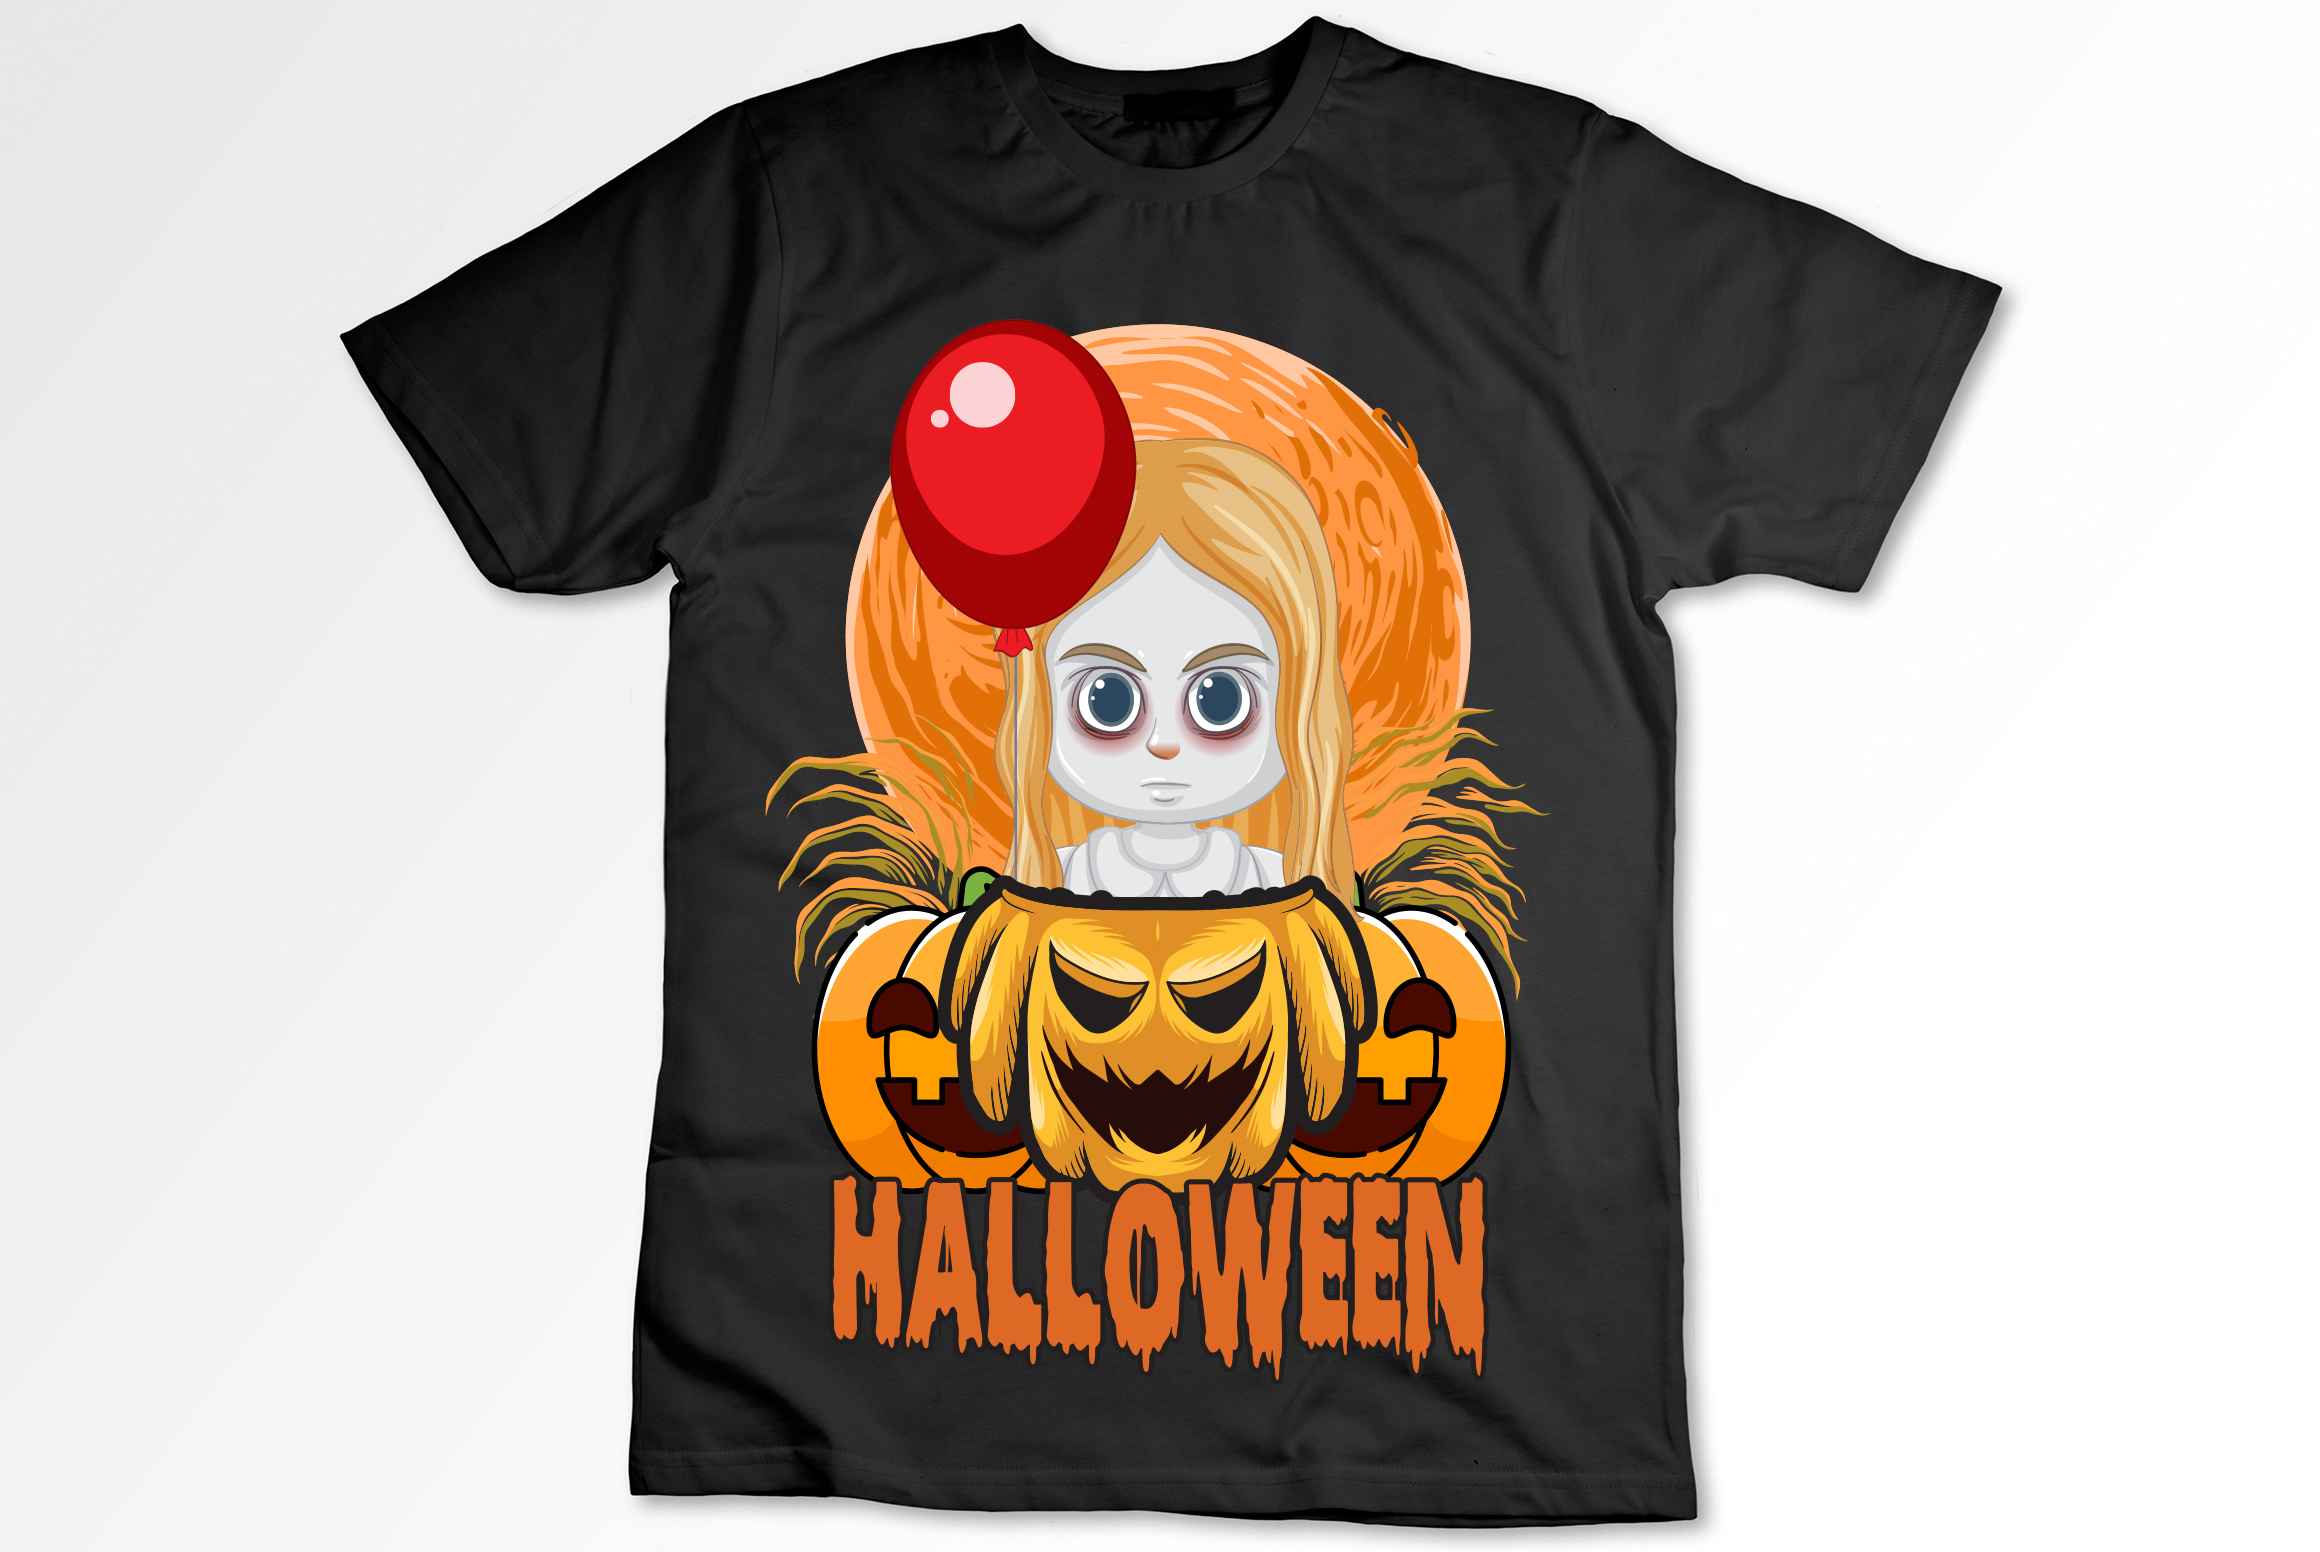 Roblox T-shirt // Black and orange pusheen themed halloween top